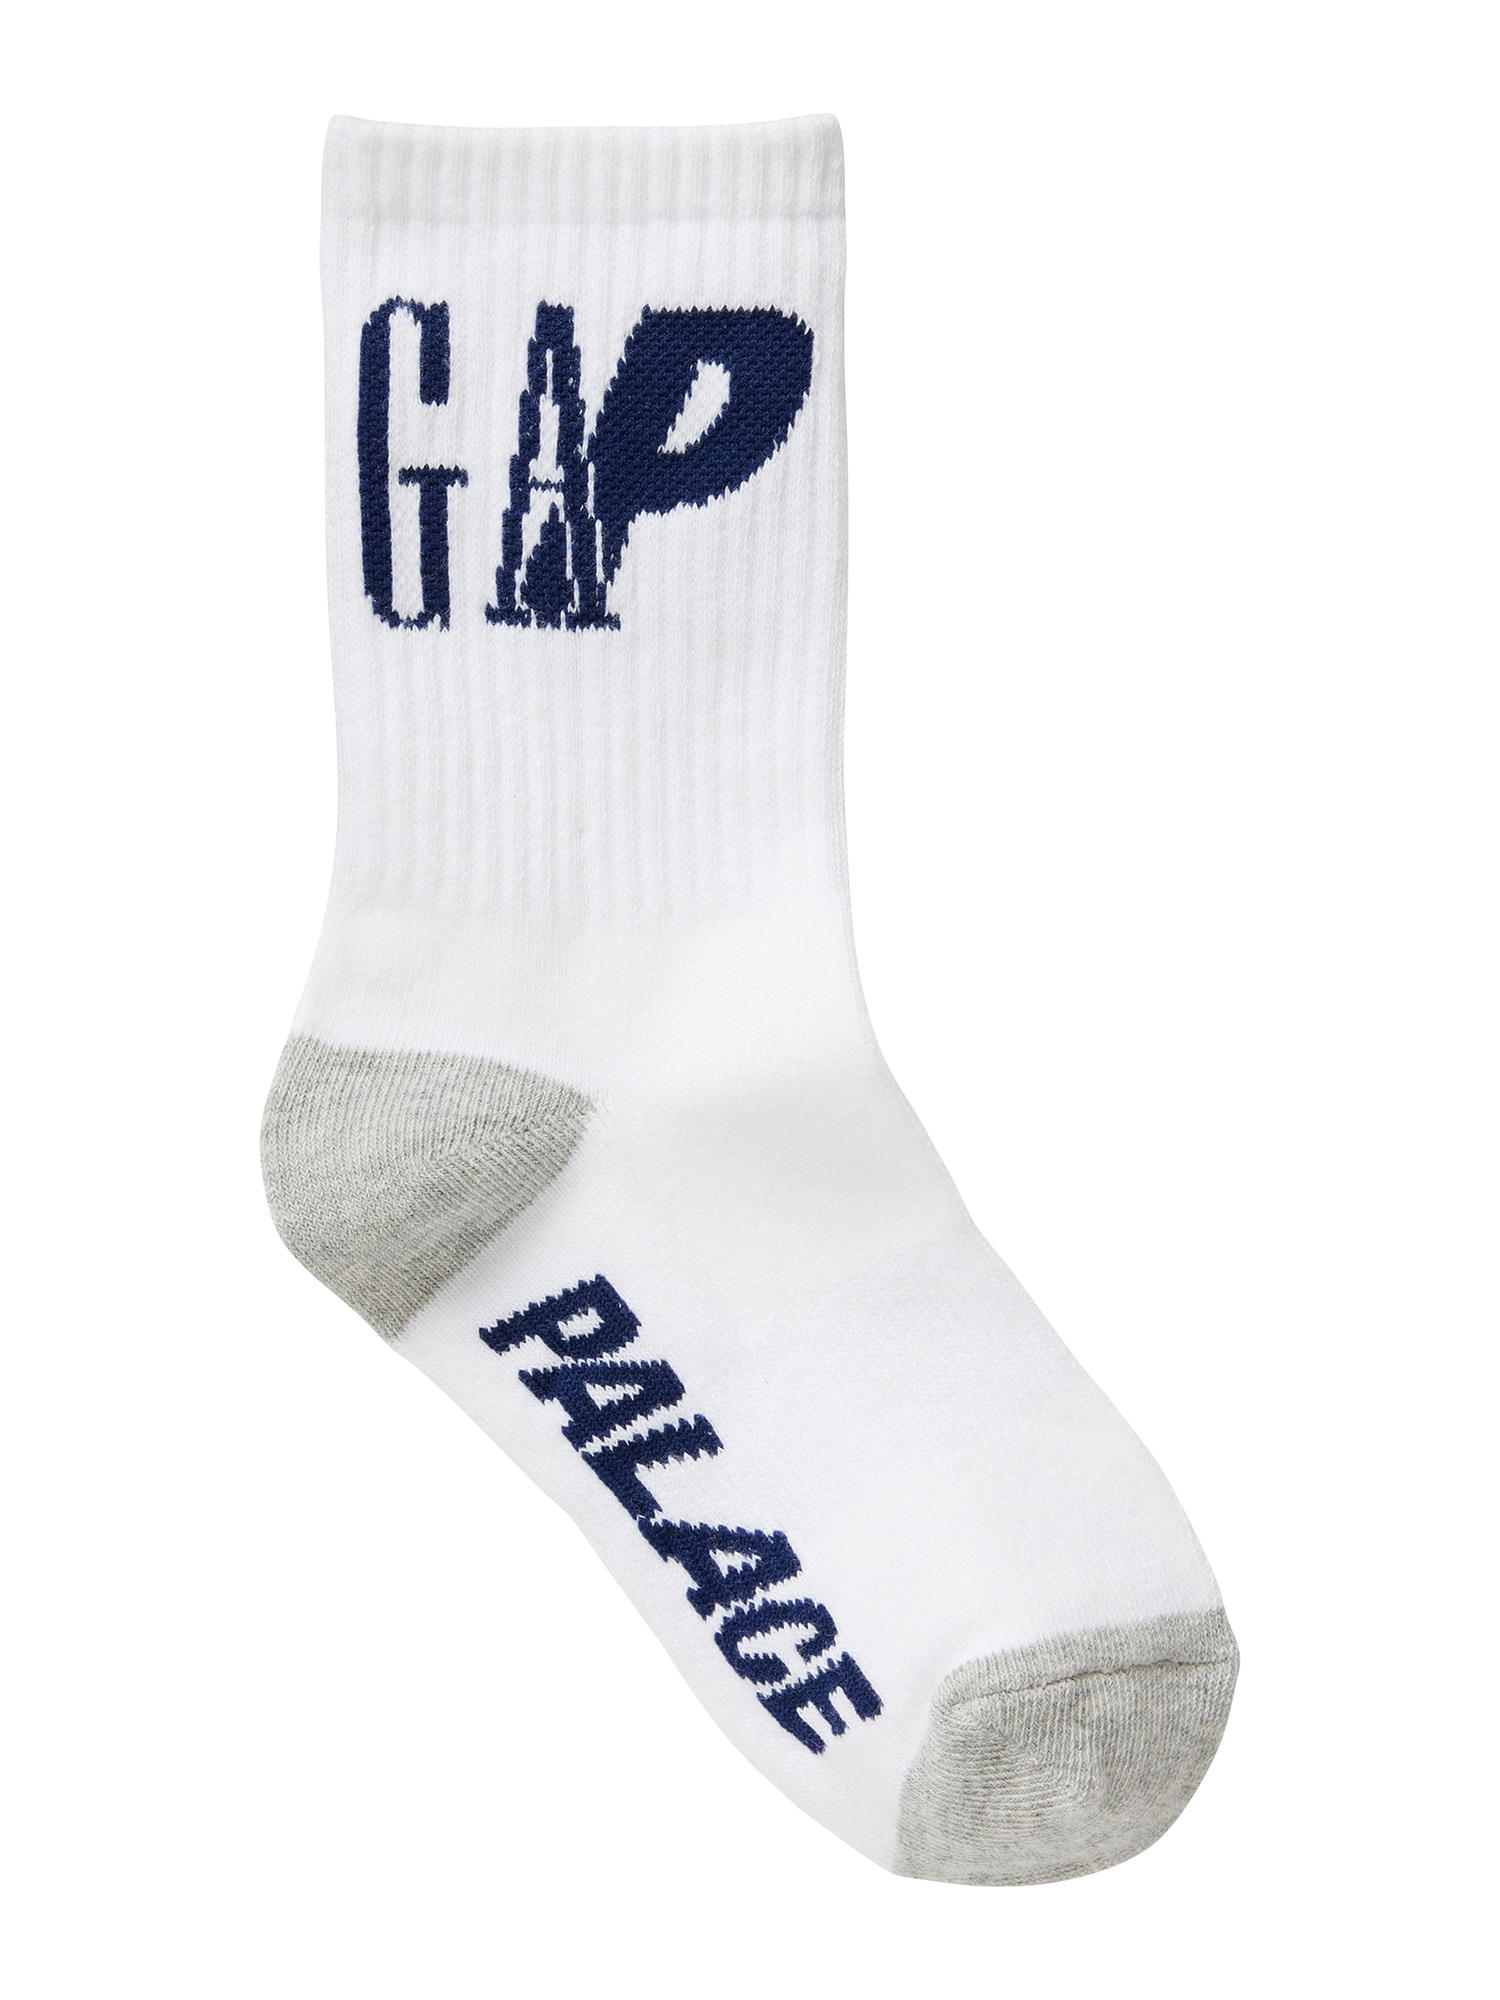 Palace Gap Kids Crew Socks